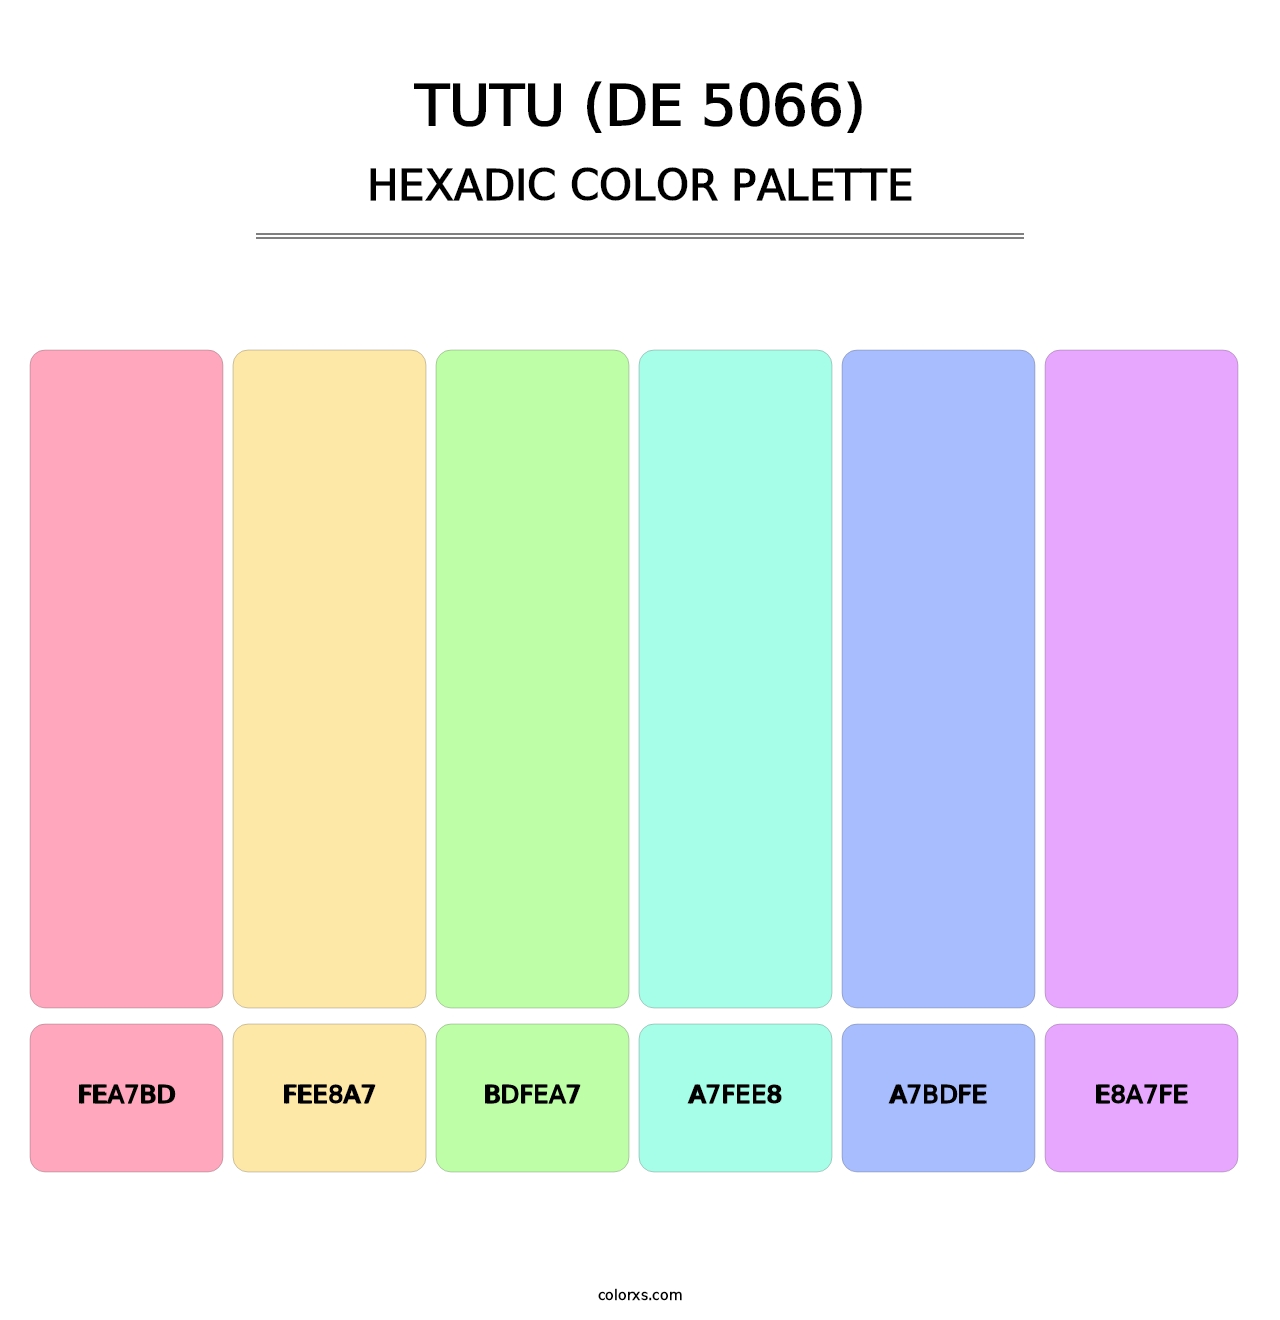 Tutu (DE 5066) - Hexadic Color Palette